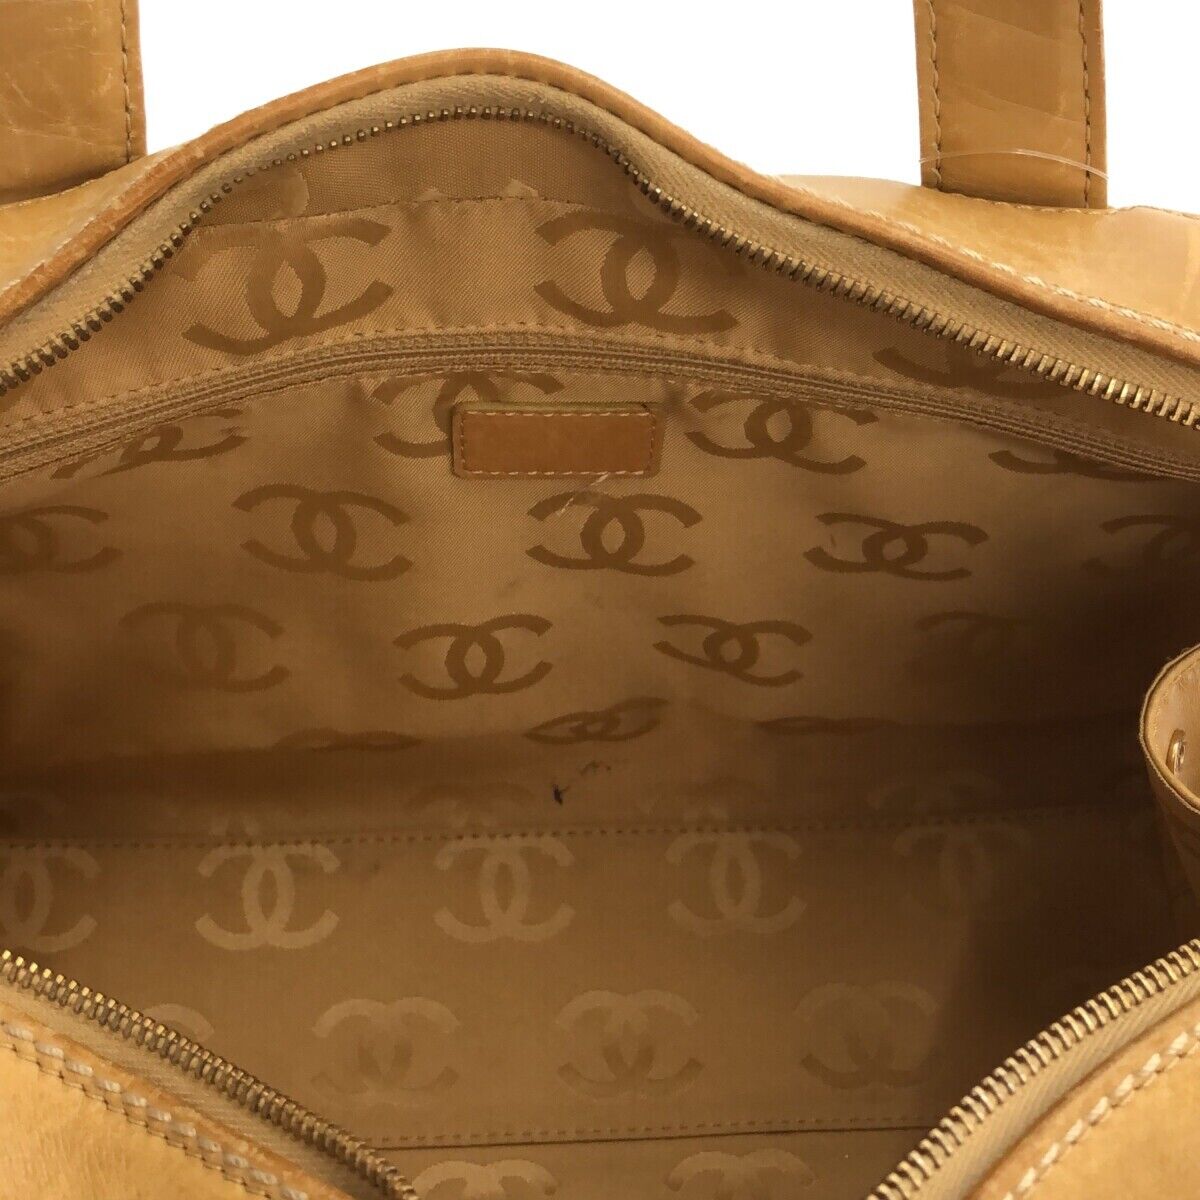 Chanel Wild Stitch Hand Bag – Timeless Vintage Company